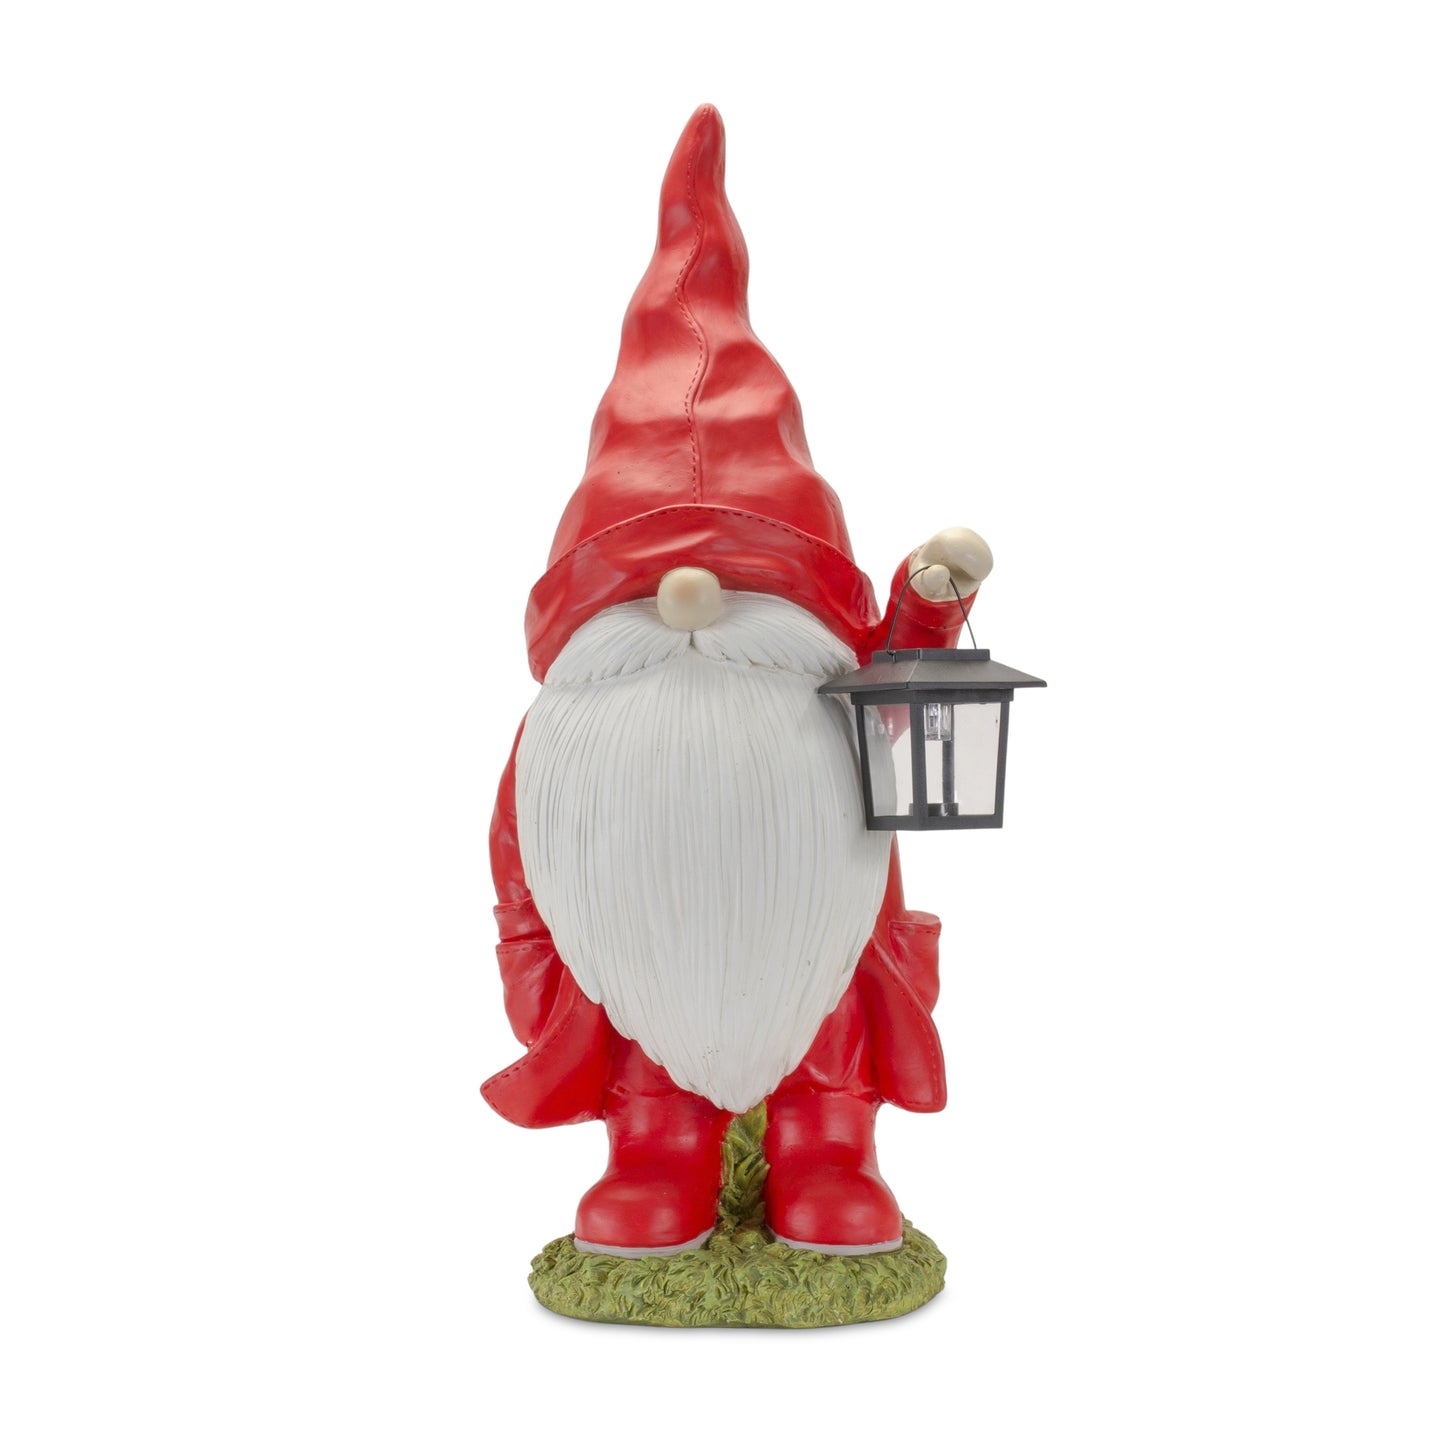 Raincoat Garden Gnome Statue with Lantern Accent 24.75"H